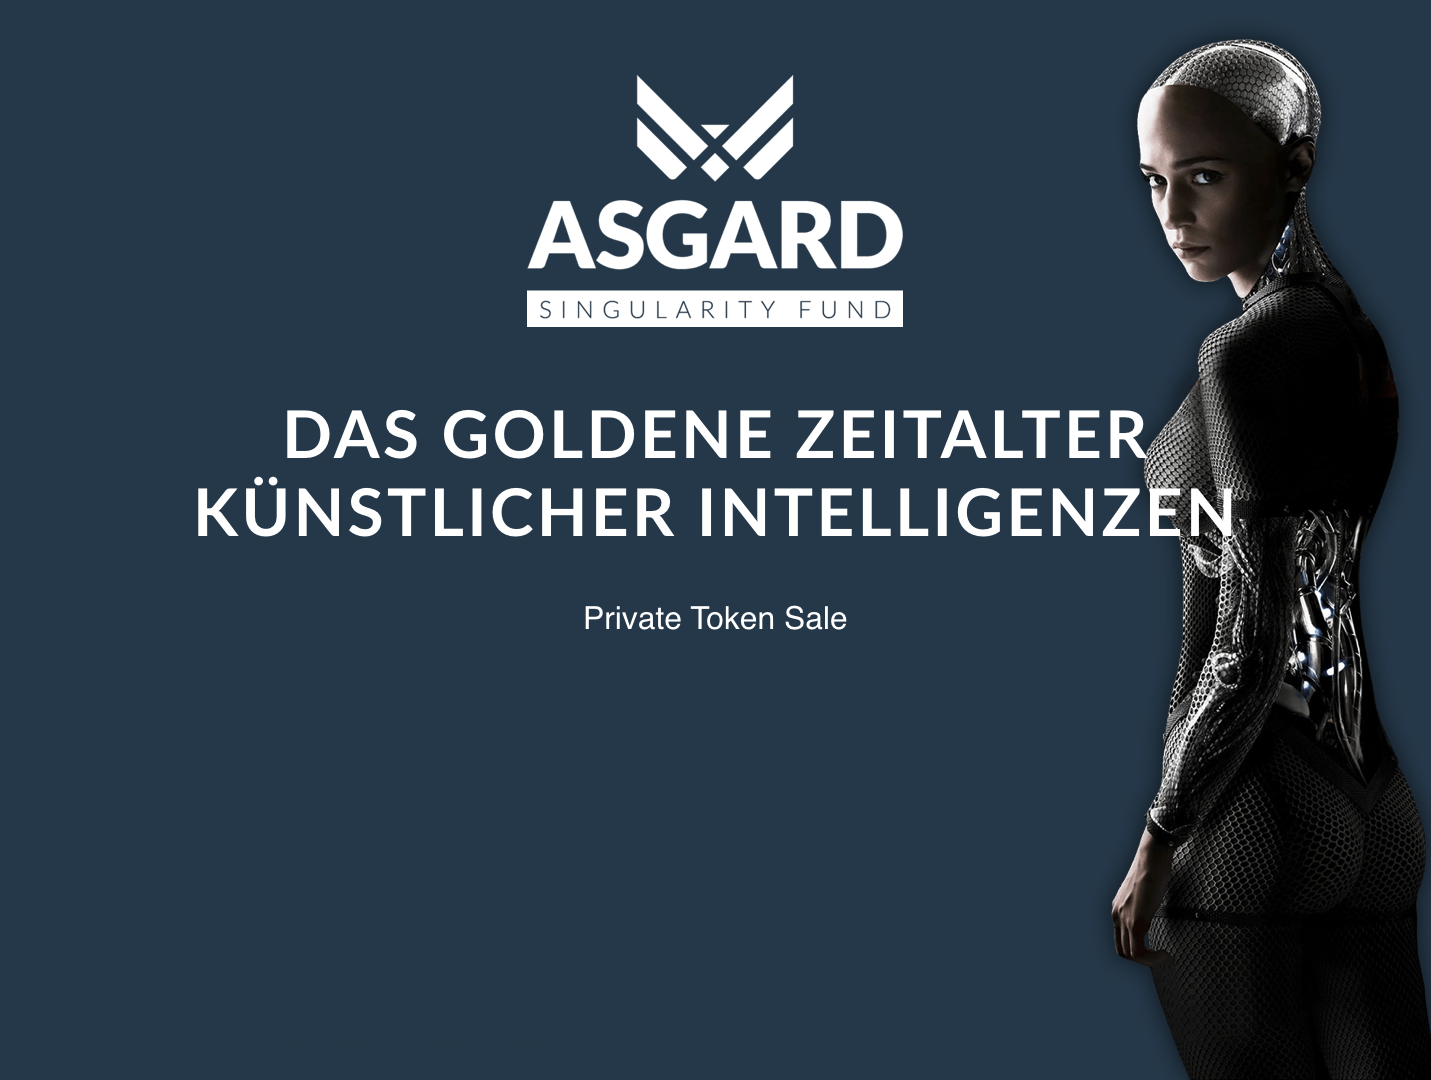 Asgard Singularity Fund